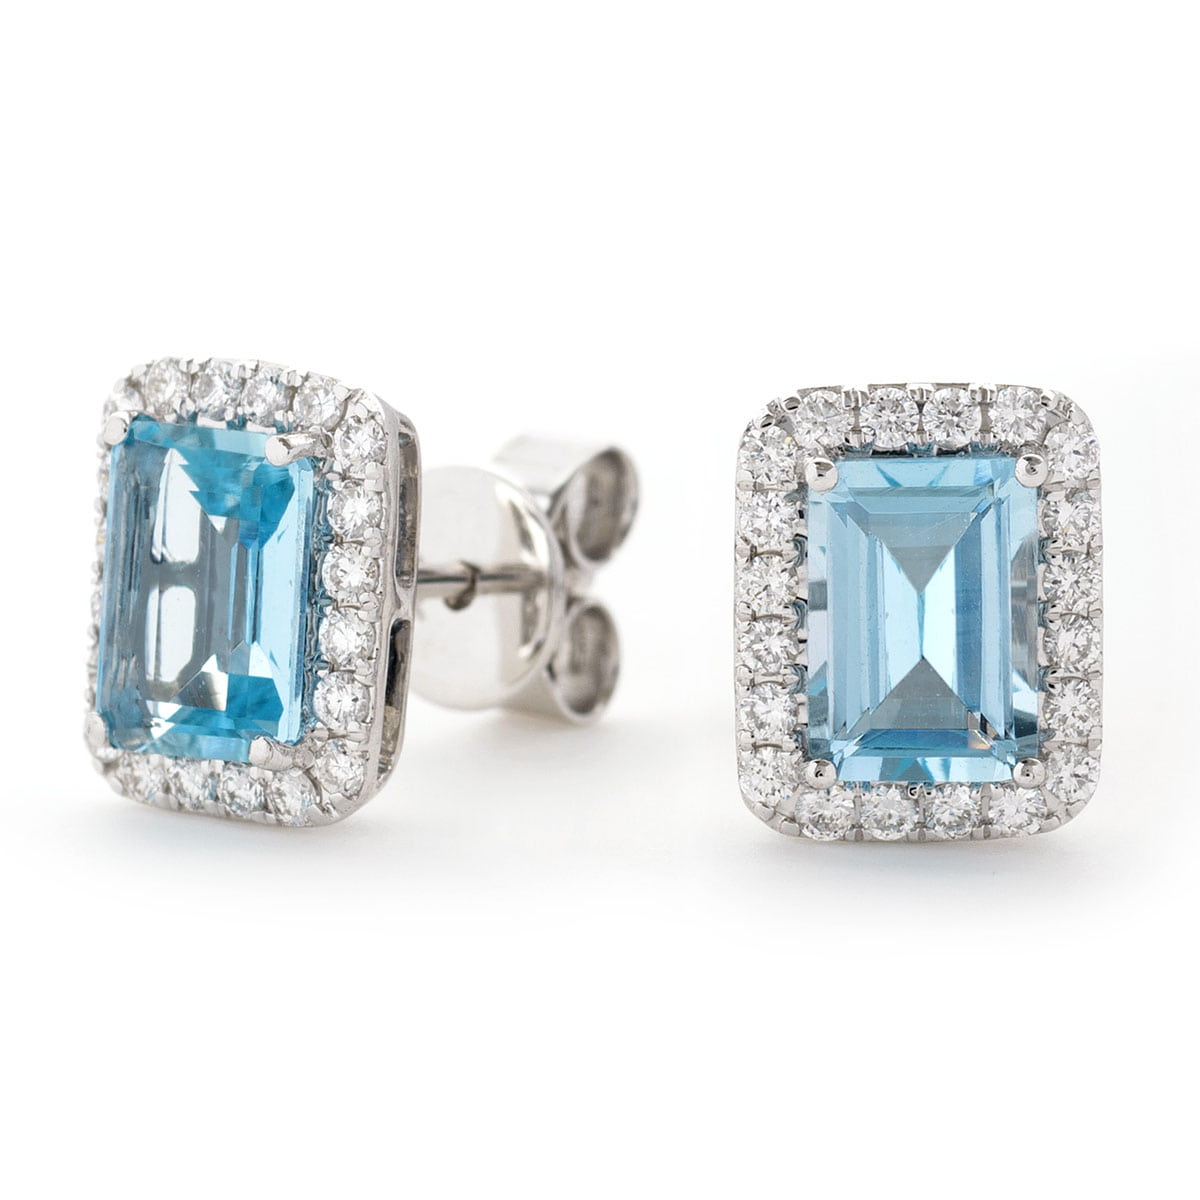 Emerald Cut Aquamarine Stud Earrings With Diamond Halo | Earrings ...